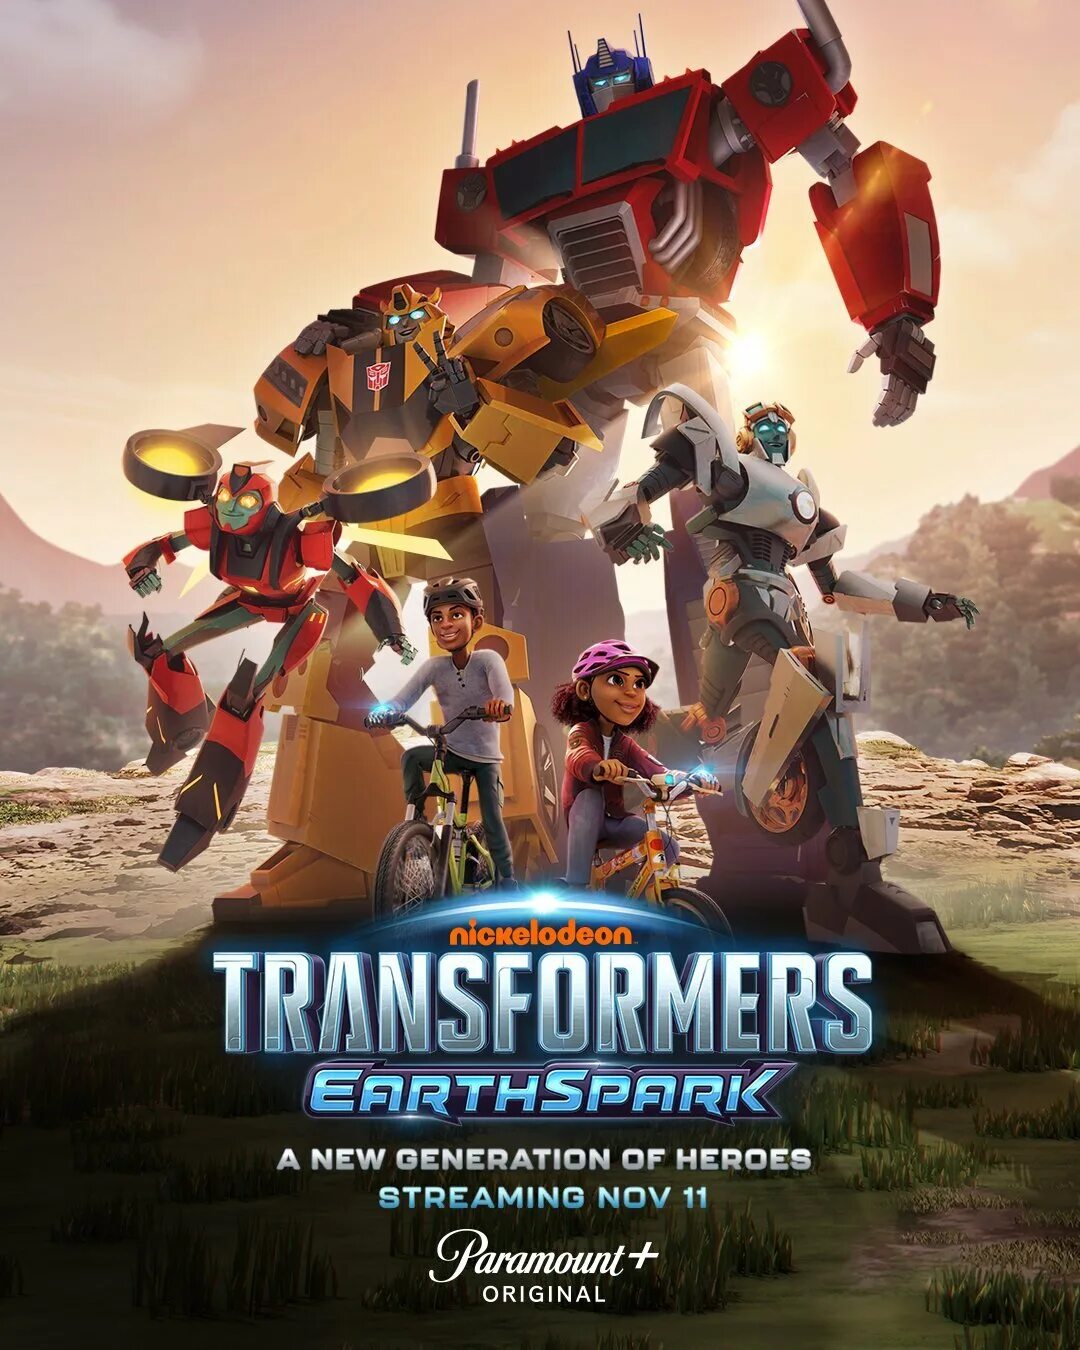 Transformers Earth Spark 2022. Transformers earthspark